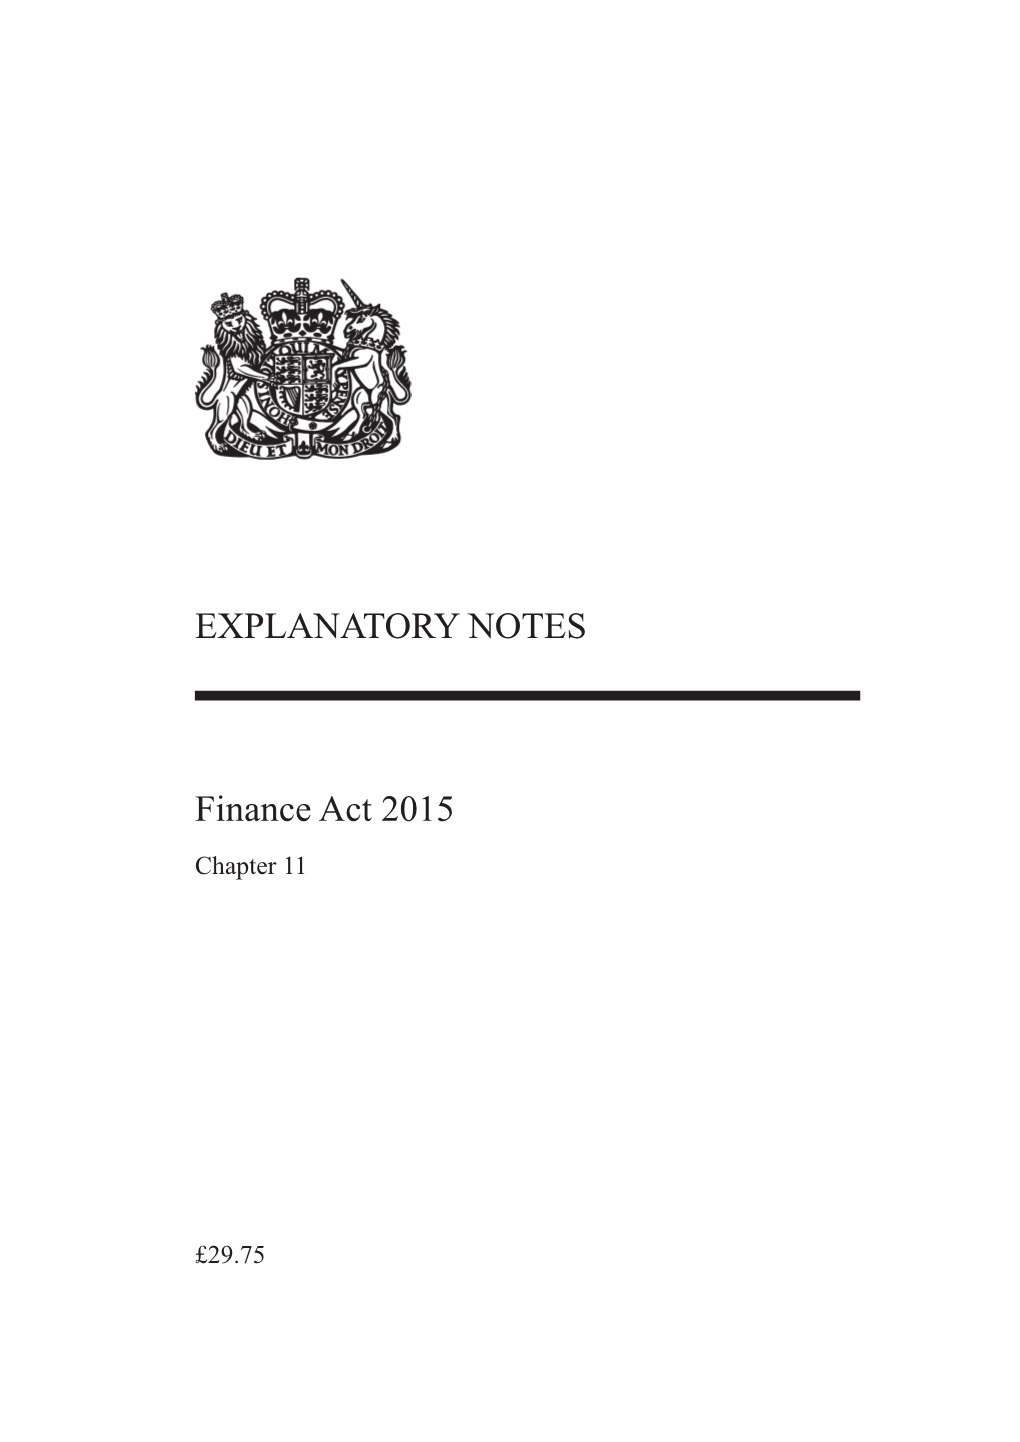 EXPLANATORY NOTES Finance Act 2015